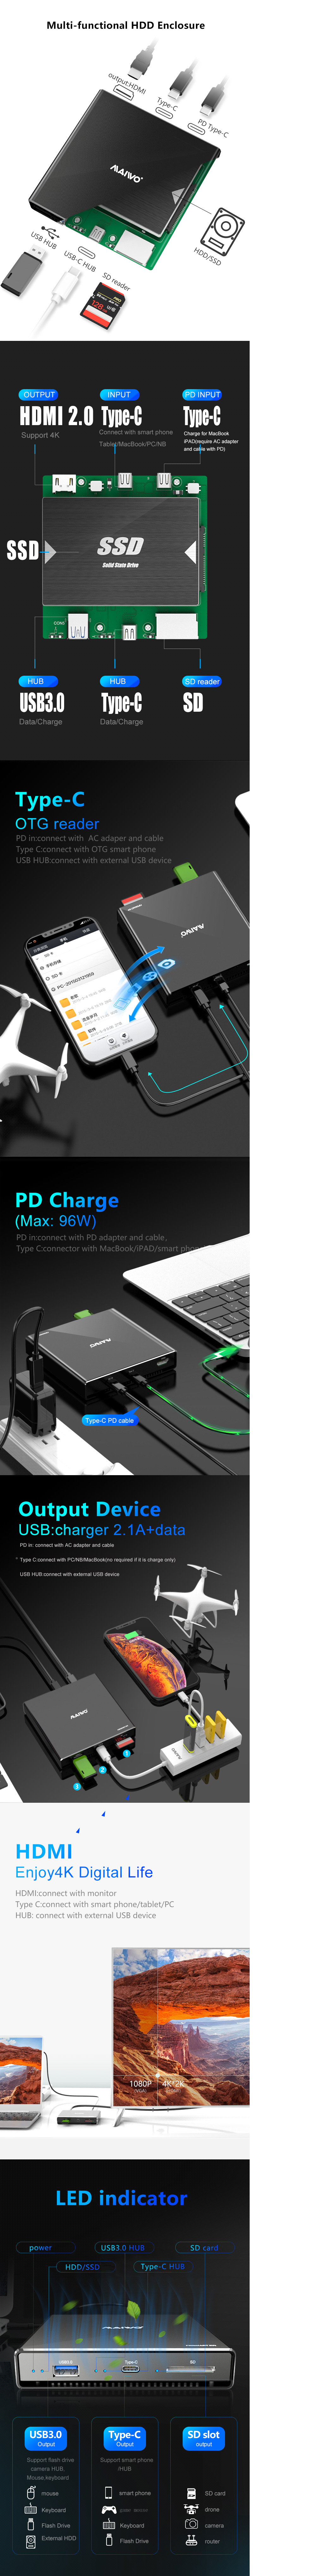 MAIWO-HDD-Enclosure-SD-Card-Reader-USB-Hub-Type-C-OTG-Reader-PD-Charge-HD-Converter-1750281-1